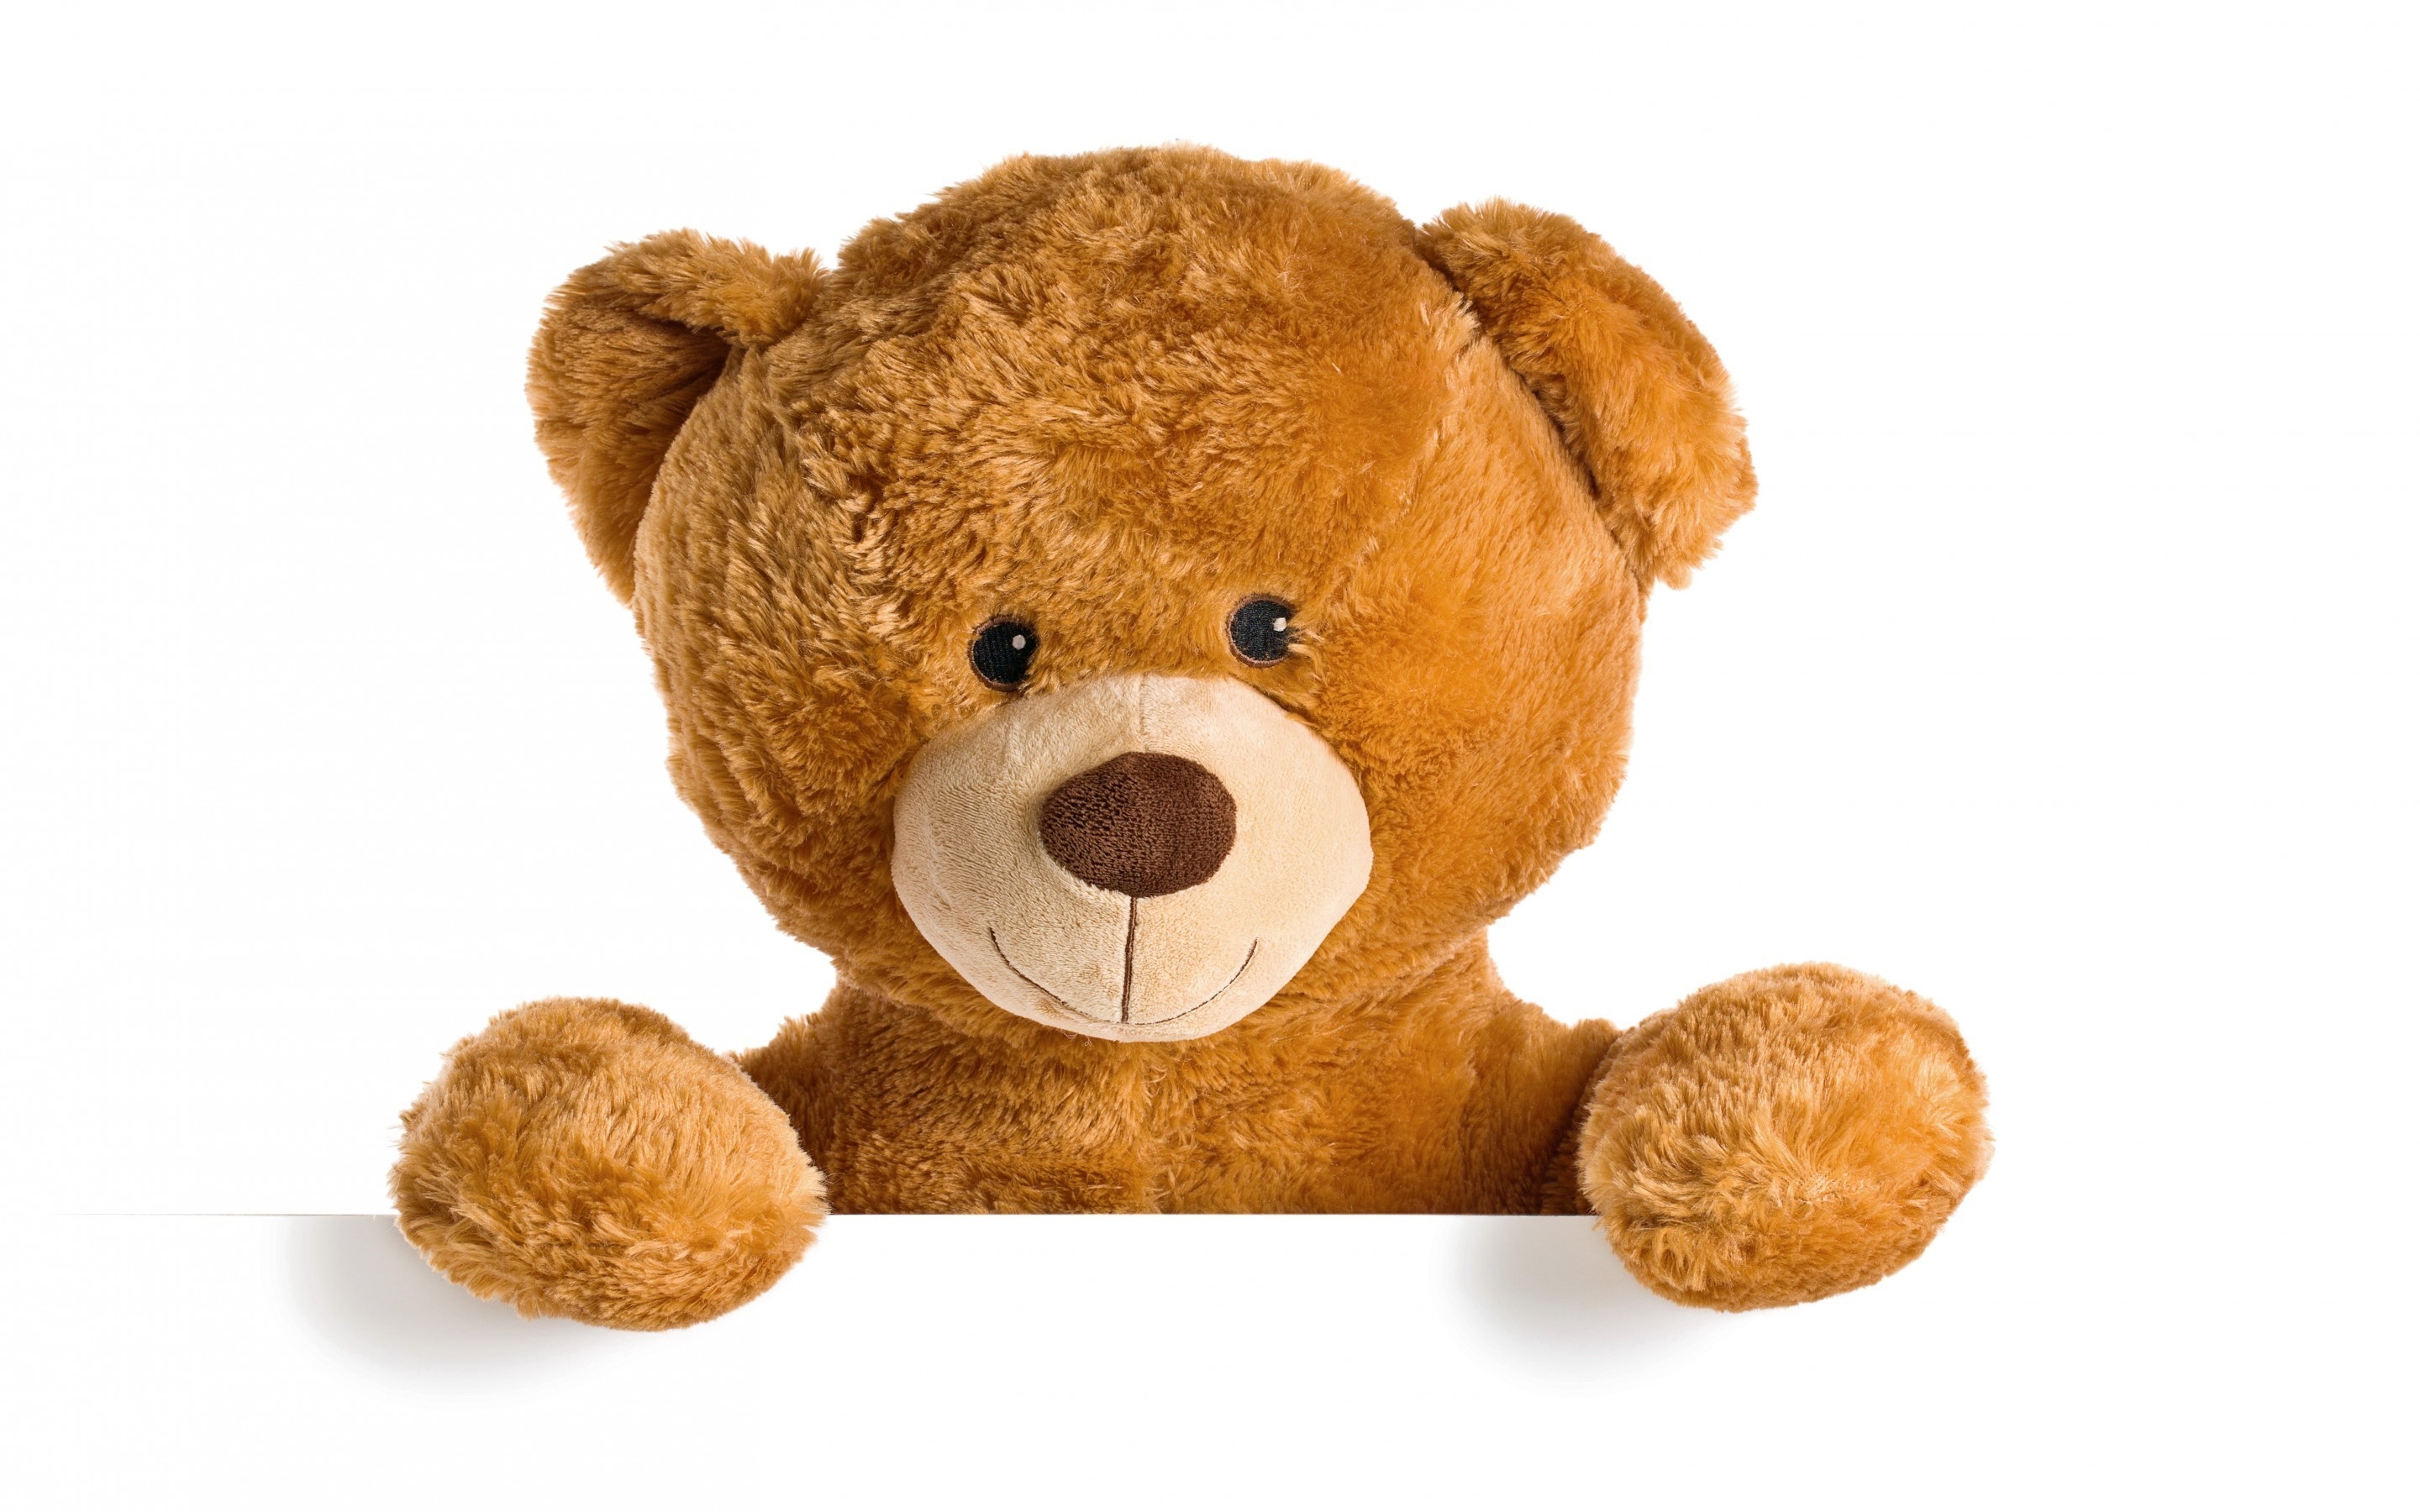 Cute Teddy Bear for 2880 x 1800 Retina Display resolution